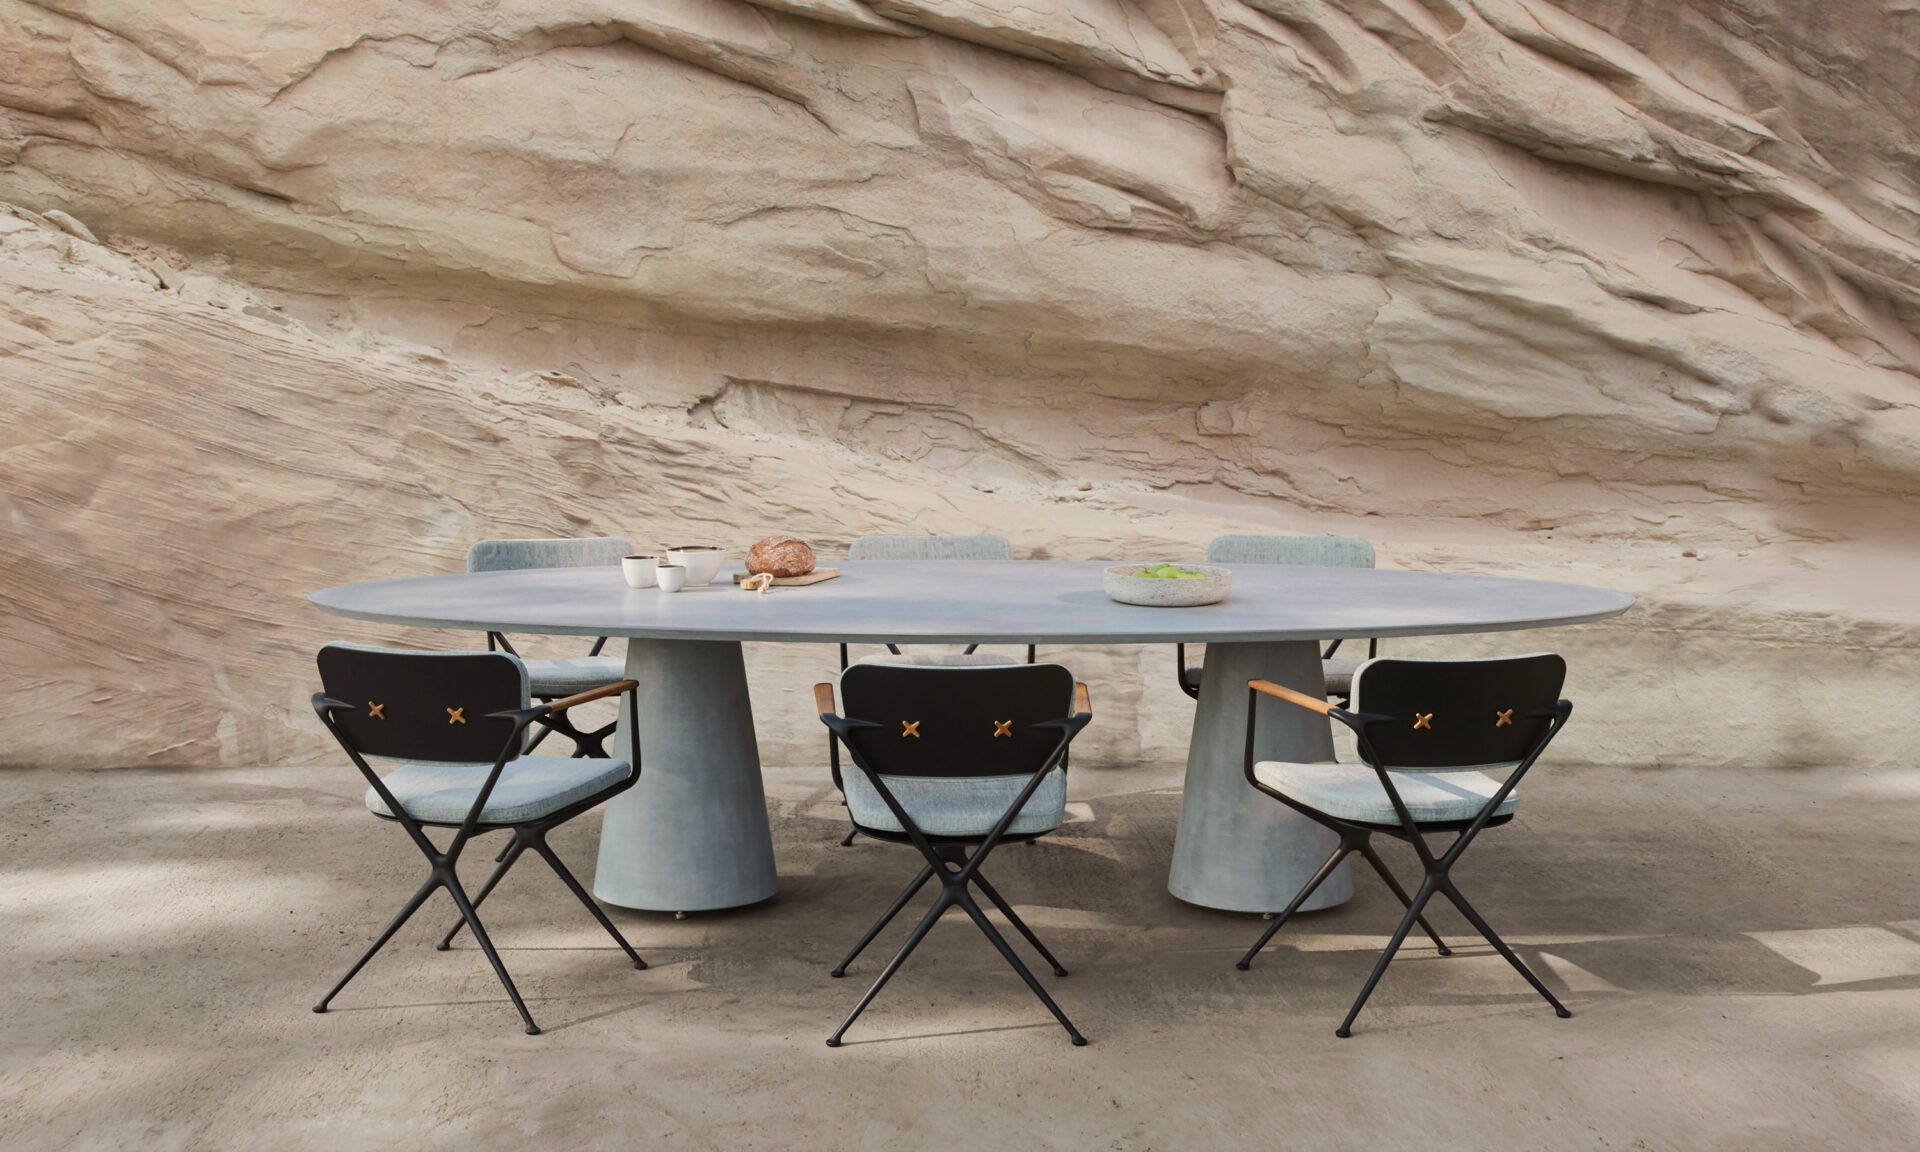 Exes Table 220x120cm Alu Legs Sand - Table Top Ceramic Nero Marquina